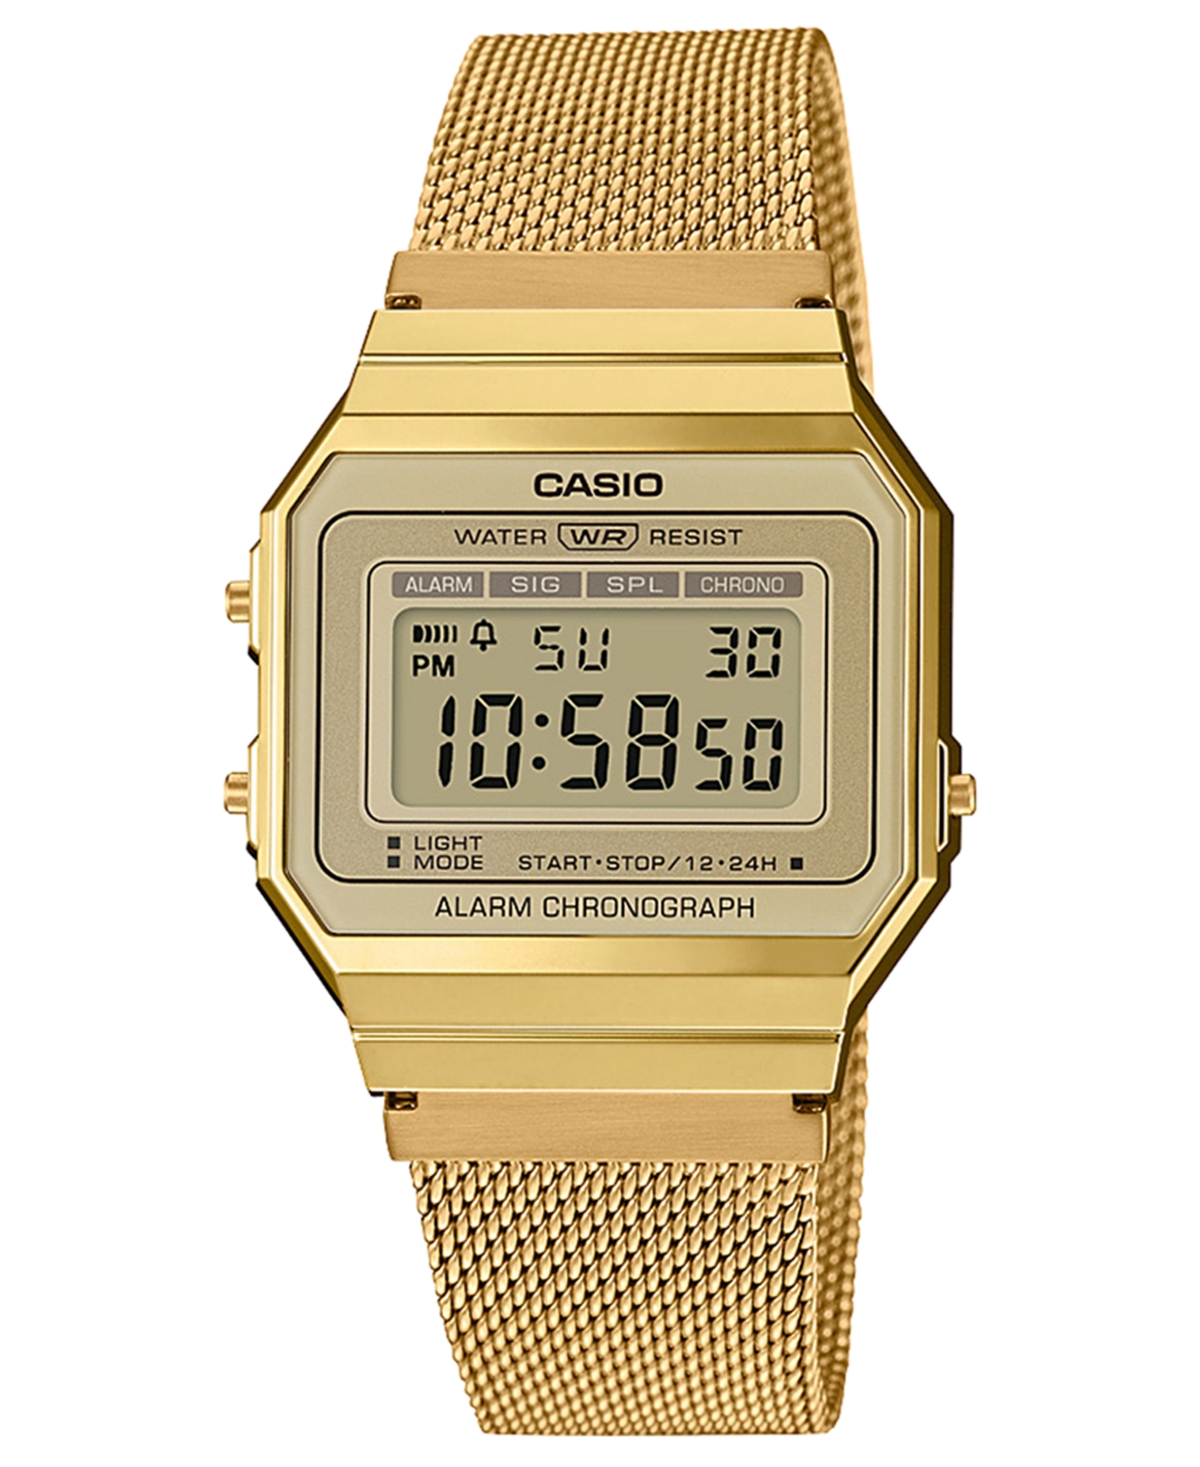 Casio Unisex Gold-Tone Stainless Steel Mesh Bracelet Watch 35.5mm